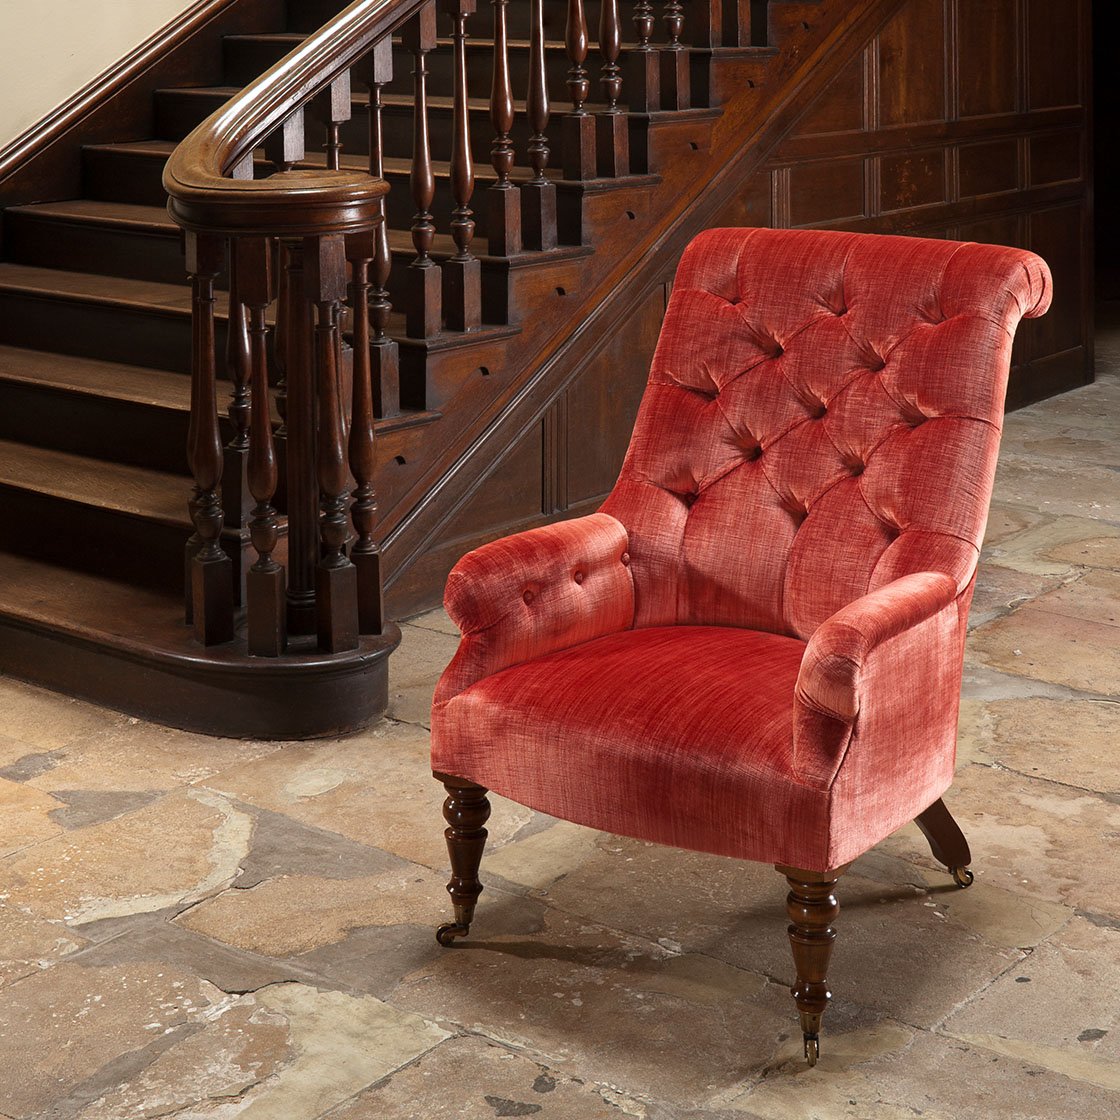 Waterford chair in Como silk velvet - Pompeiian red - Beaumont & Fletcher